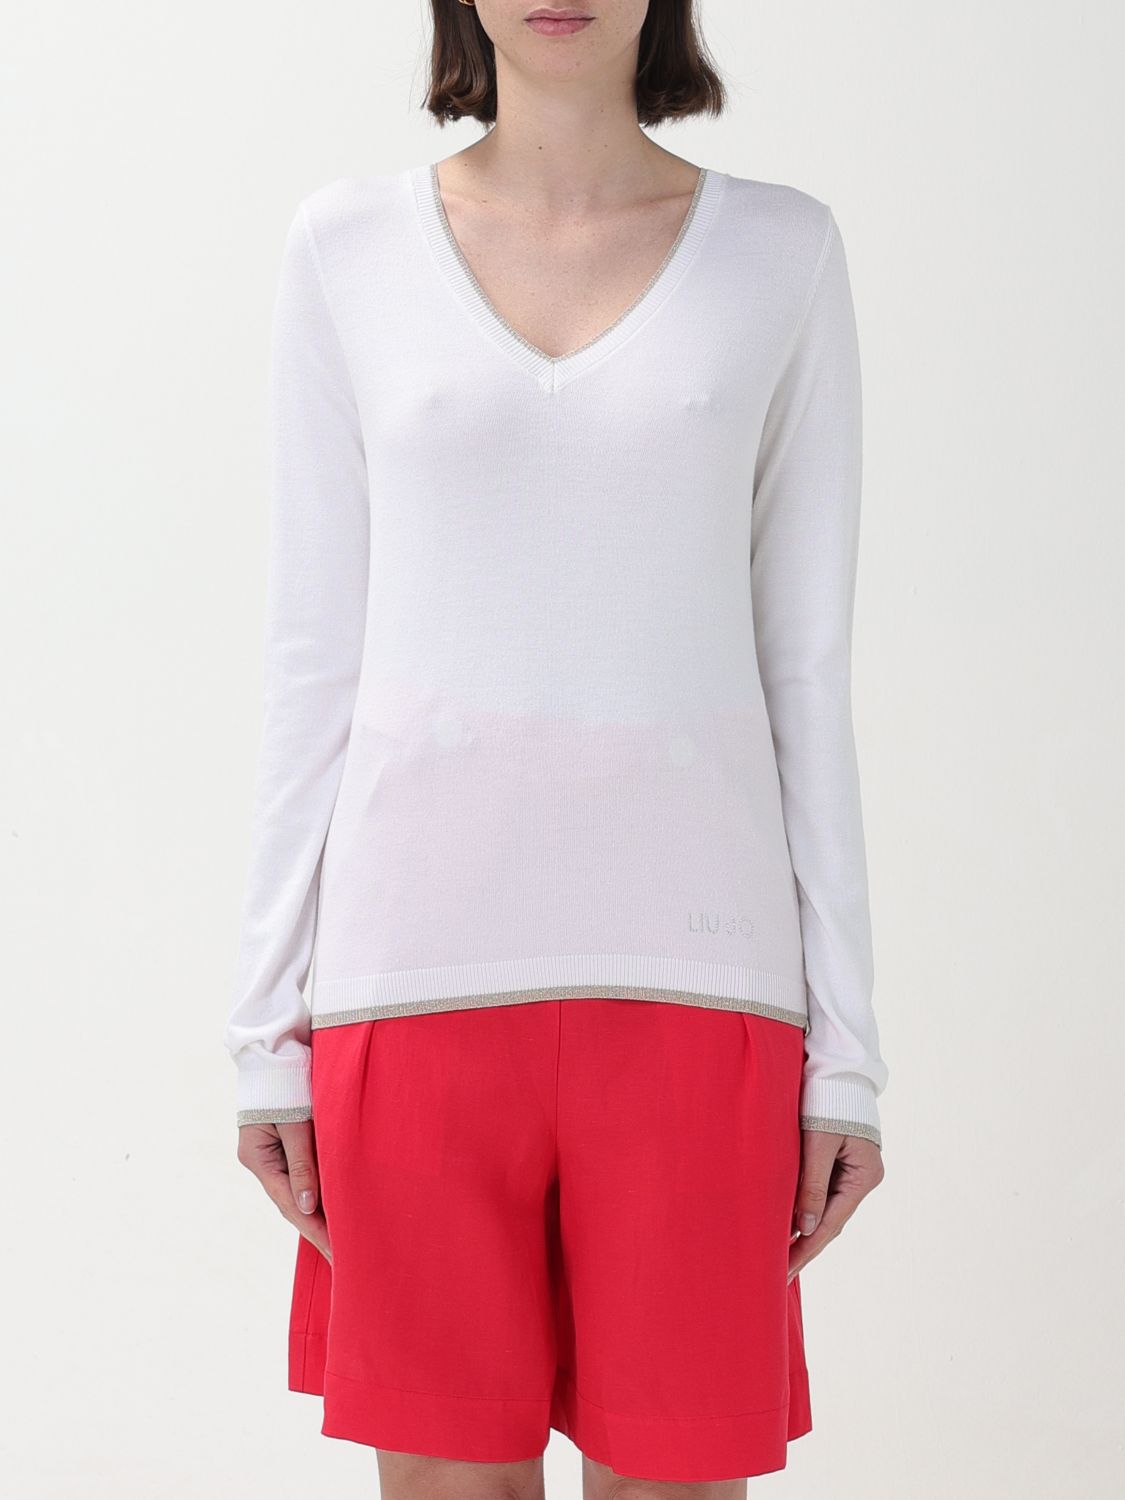 Shop Liu •jo Sweater Liu Jo Woman Color White